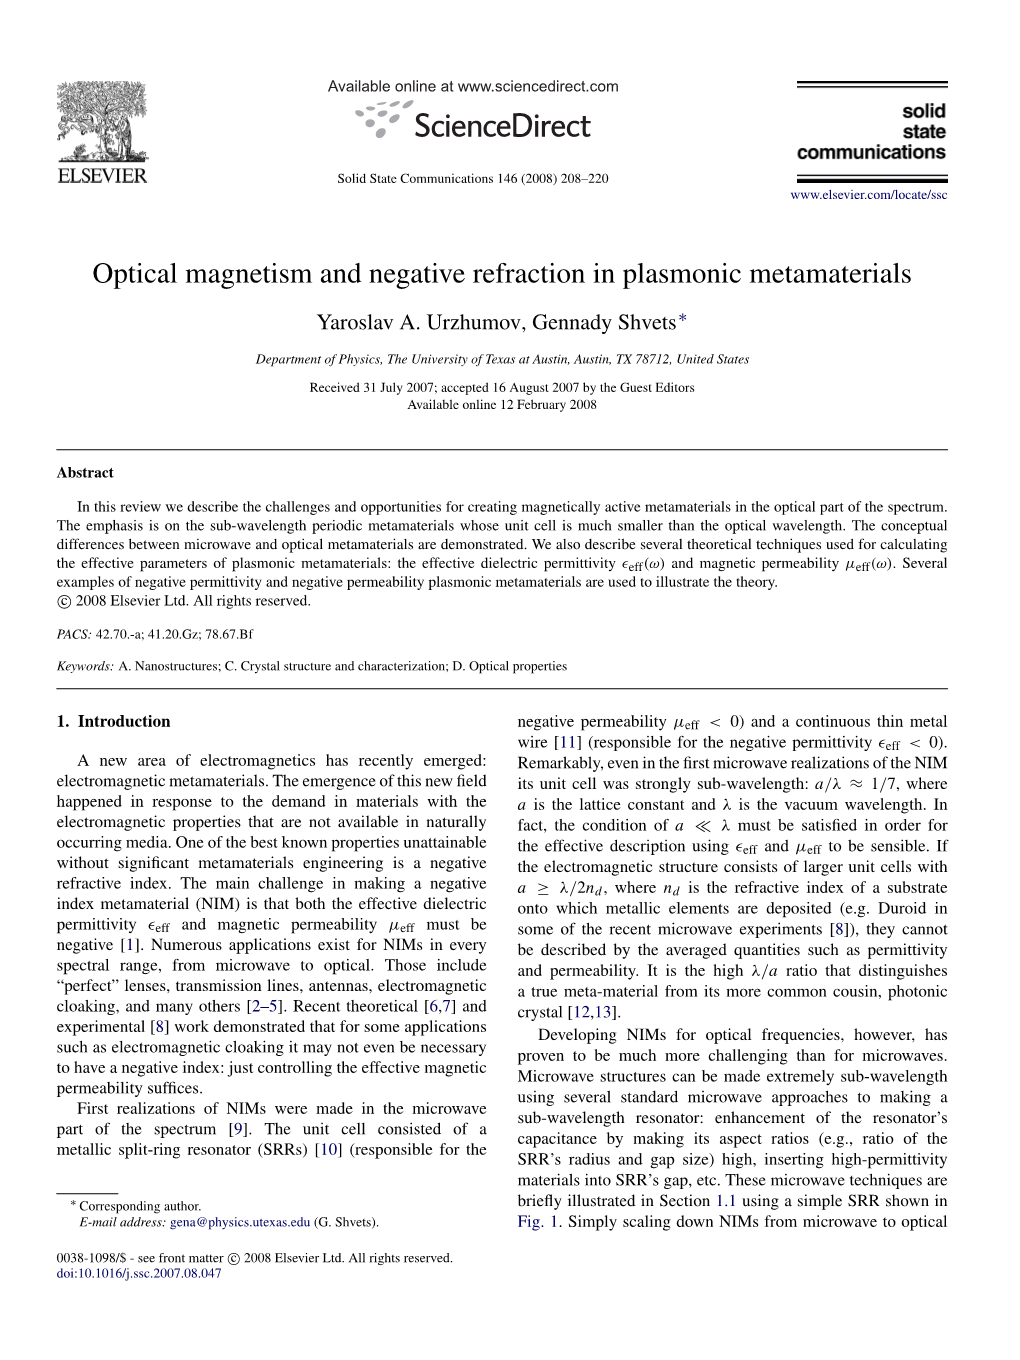 Optical Magnetism and Negative Refraction in Plasmonic Metamaterials